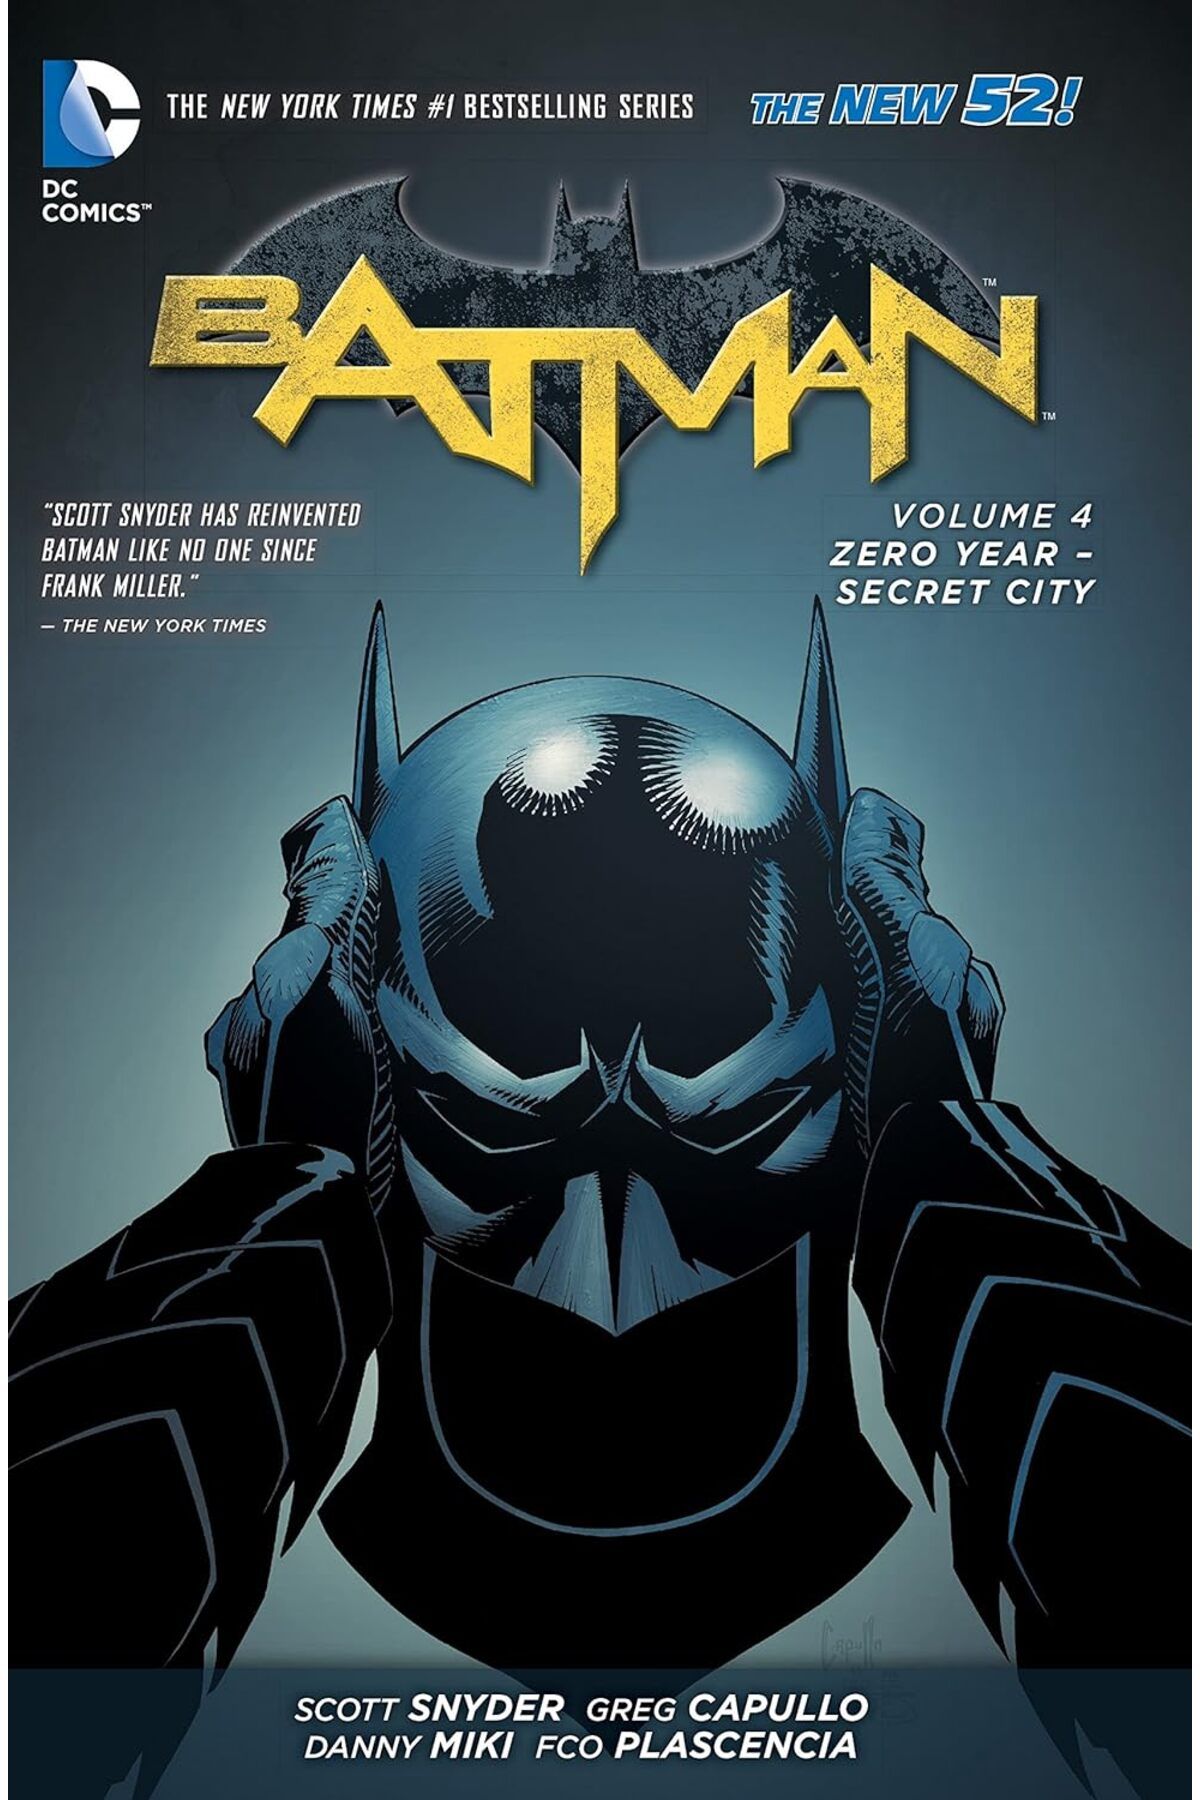 DC COMICS Batman Vol. 4: / Volume 4 Zero Year- Secret City (The New 52)